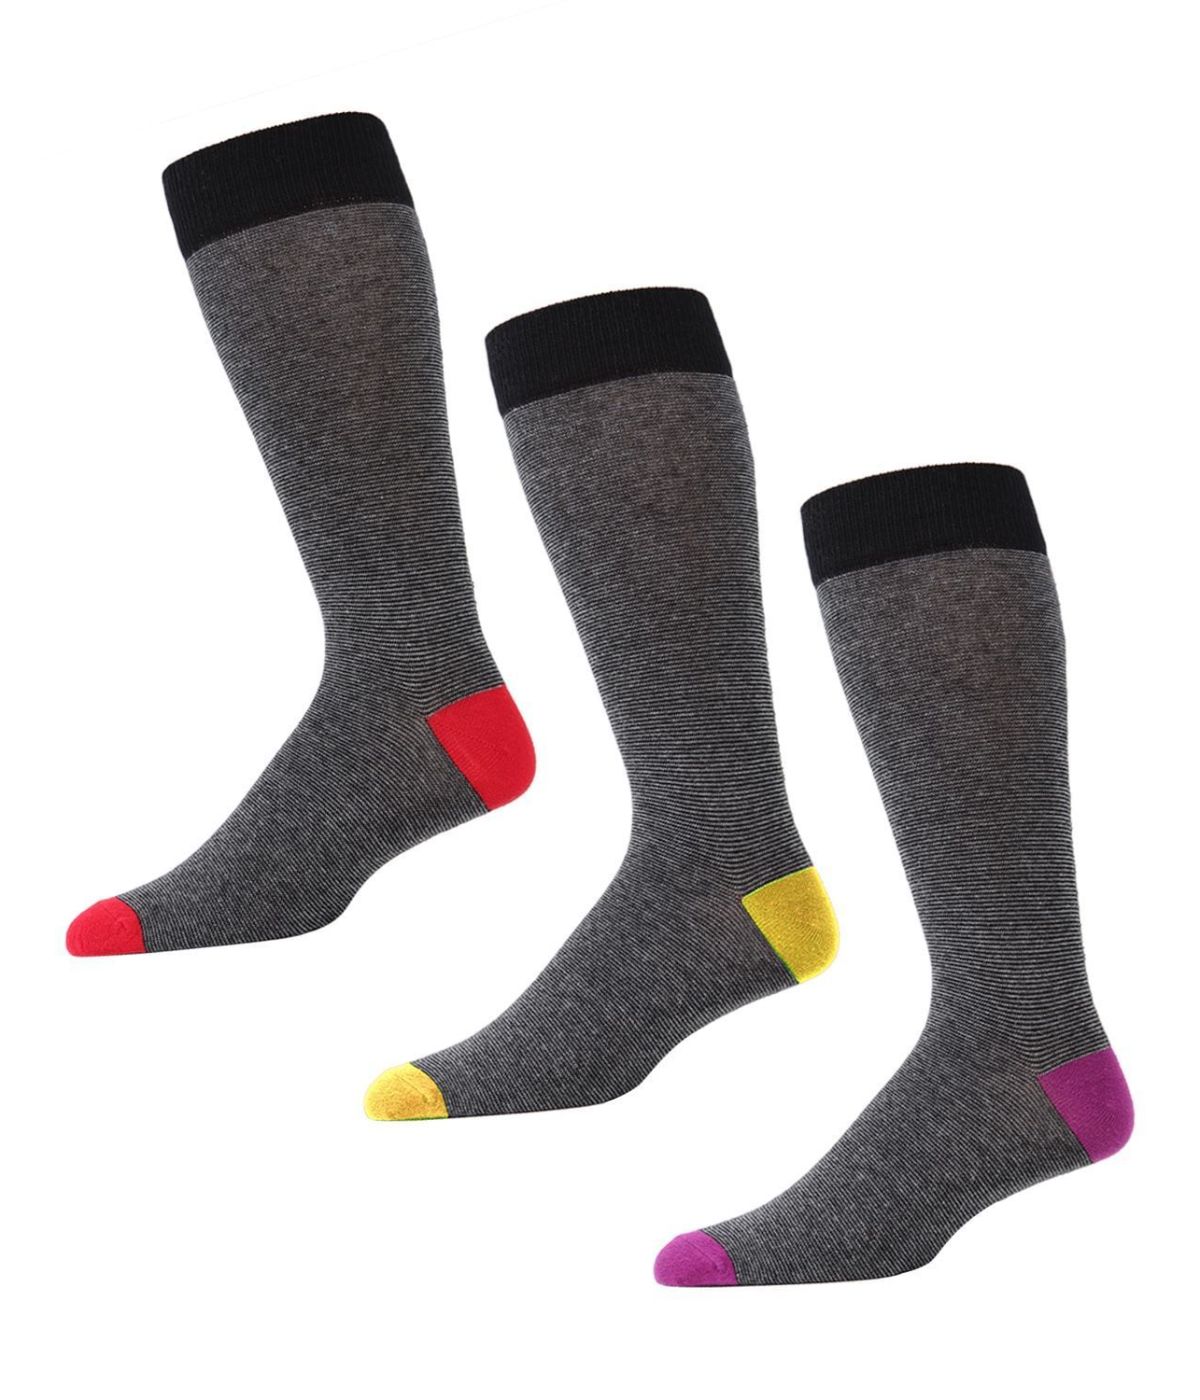 Men's Textured Tip Cotton Blend Crew Sock 3 Pack Black-Red